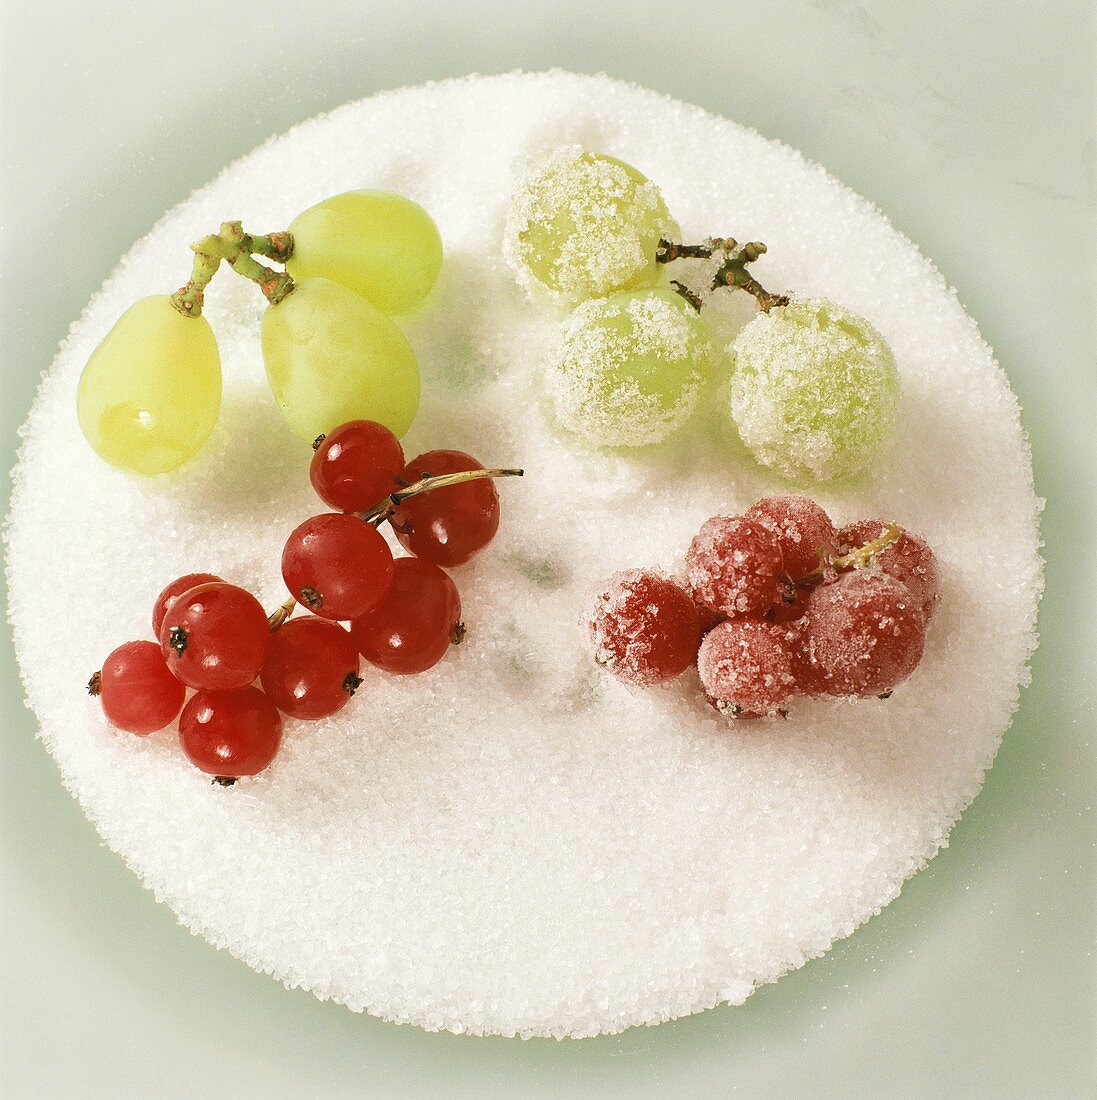 Tossing frozen fruit in sugar (cake decoration)